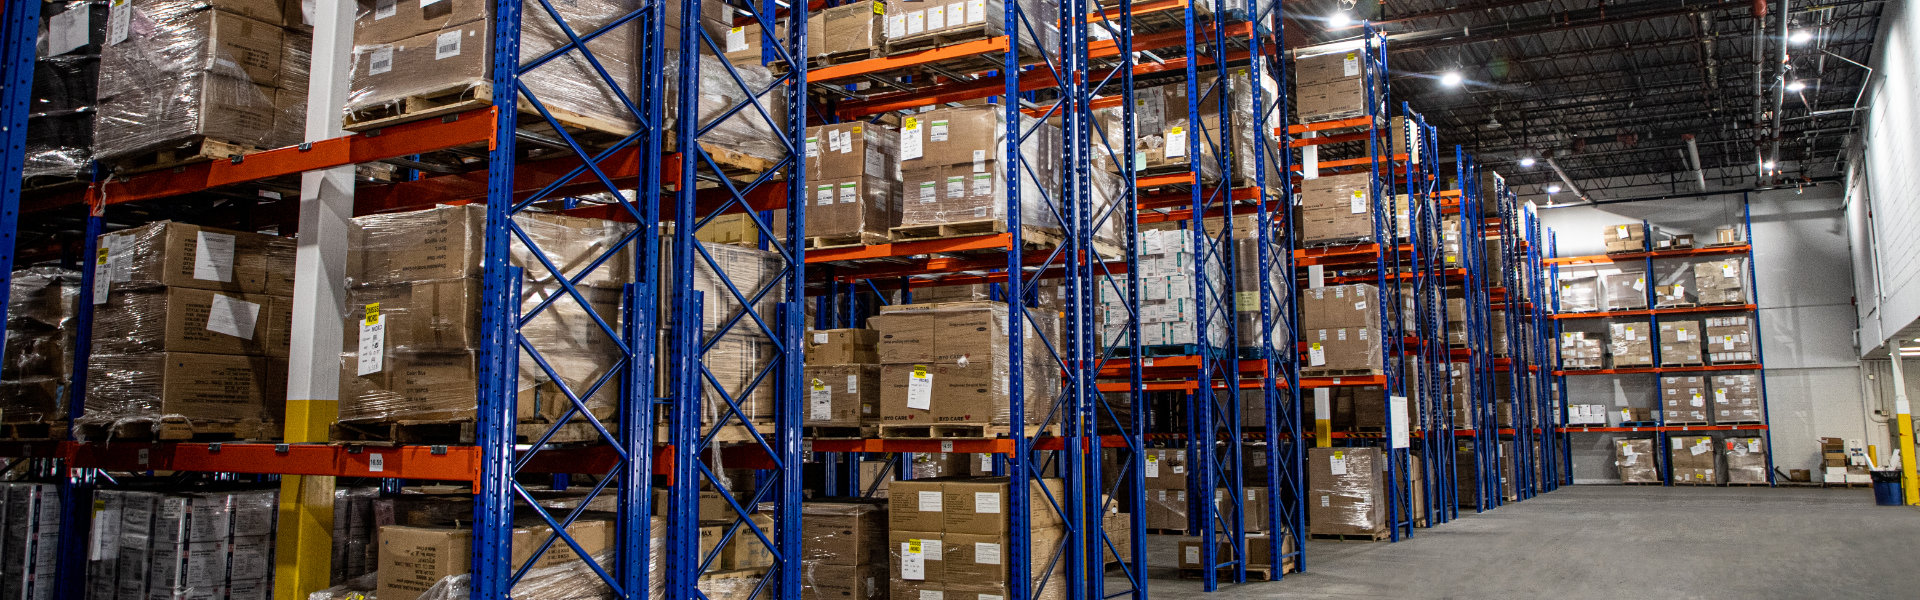 Warehousing and logistics